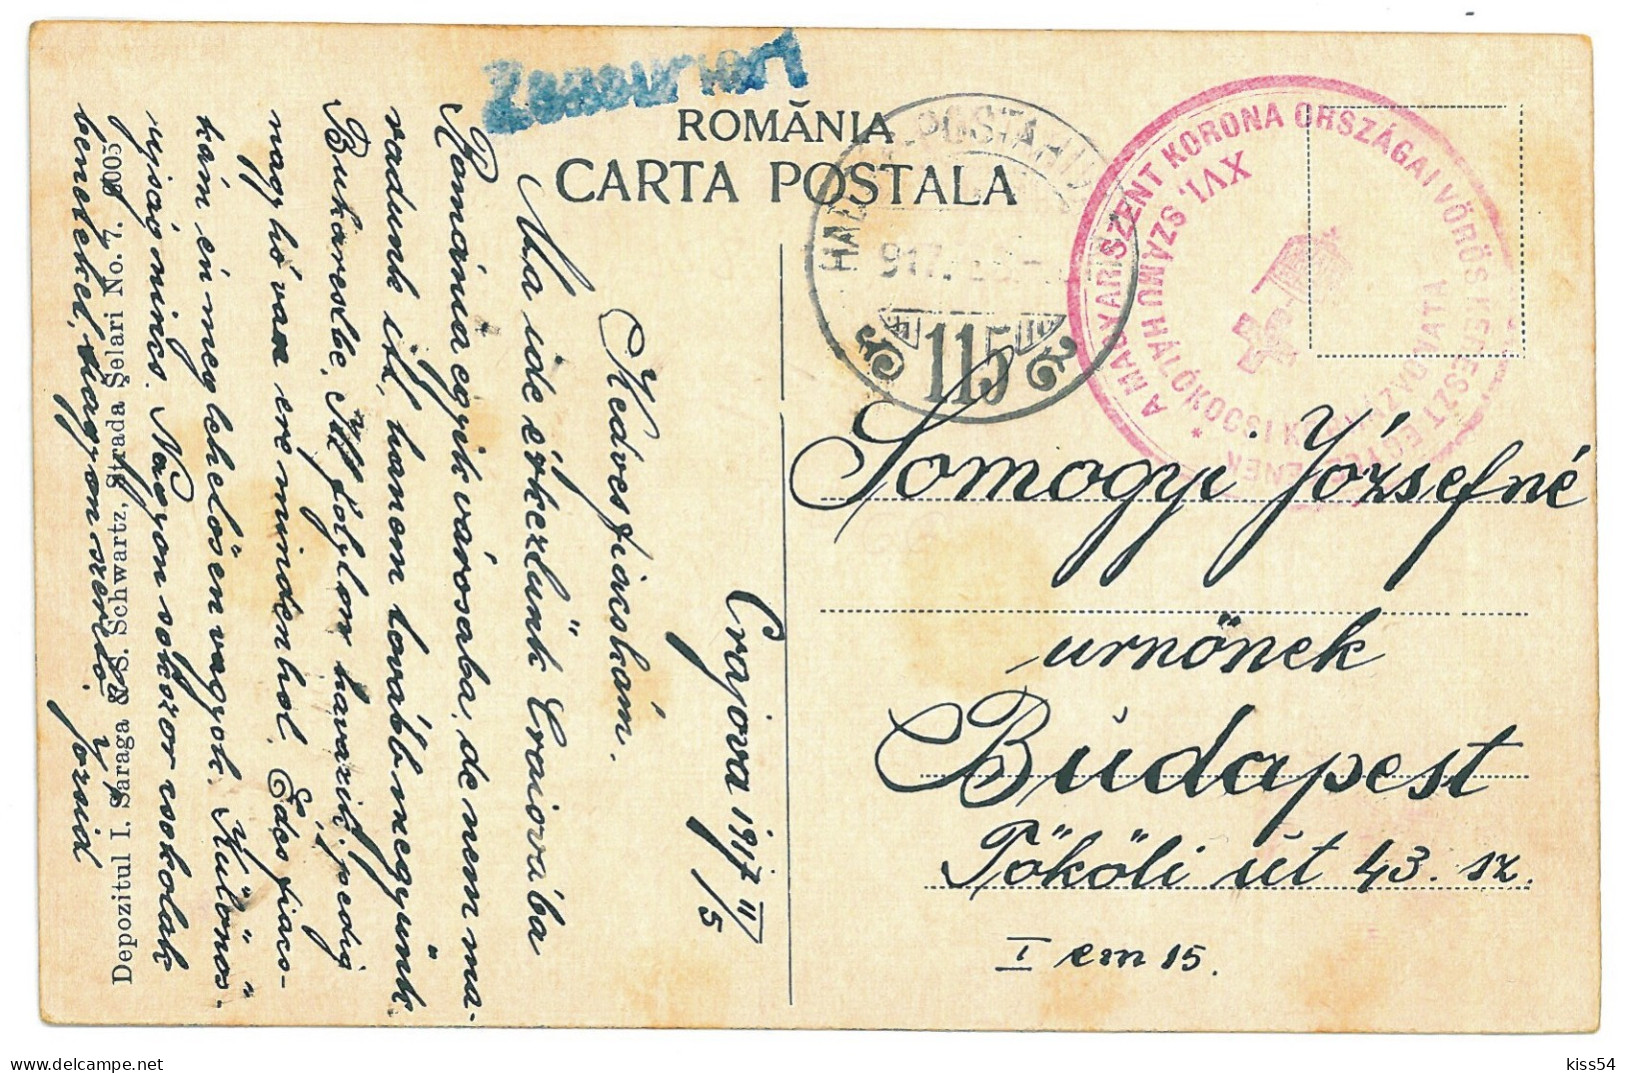 RO 999 - 20693 CRAIOVA, Street Stores, Romania - Old Postcard, CENSOR - Used - 1917 - Romania